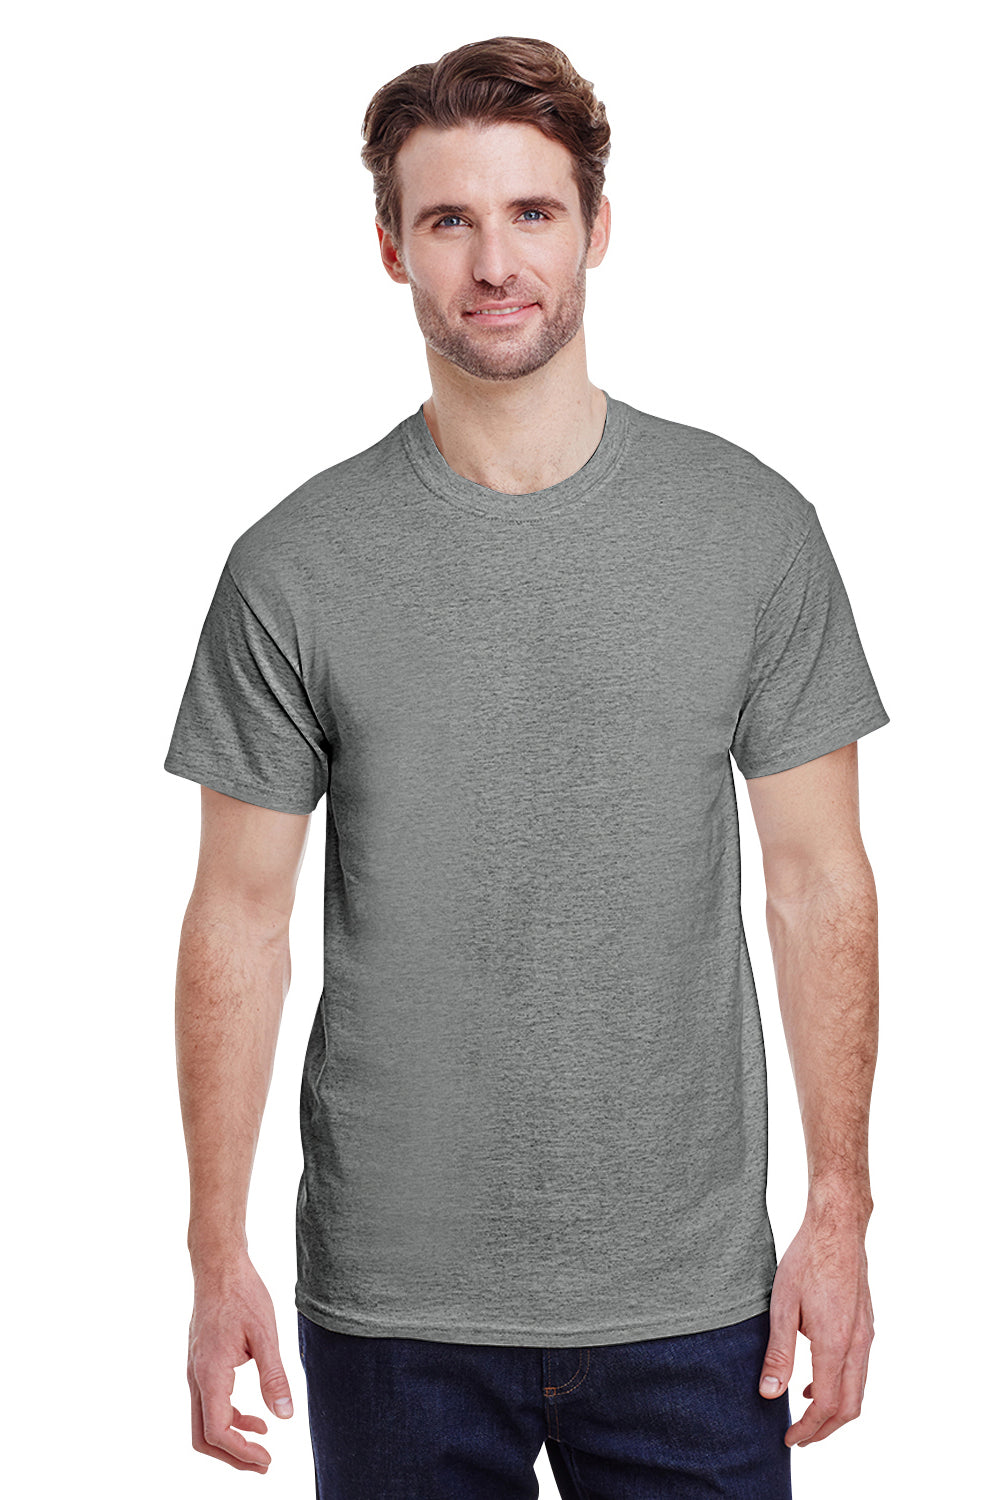 Gildan G500 Mens Short Sleeve Crewneck T-Shirt Heather Graphite Grey Front